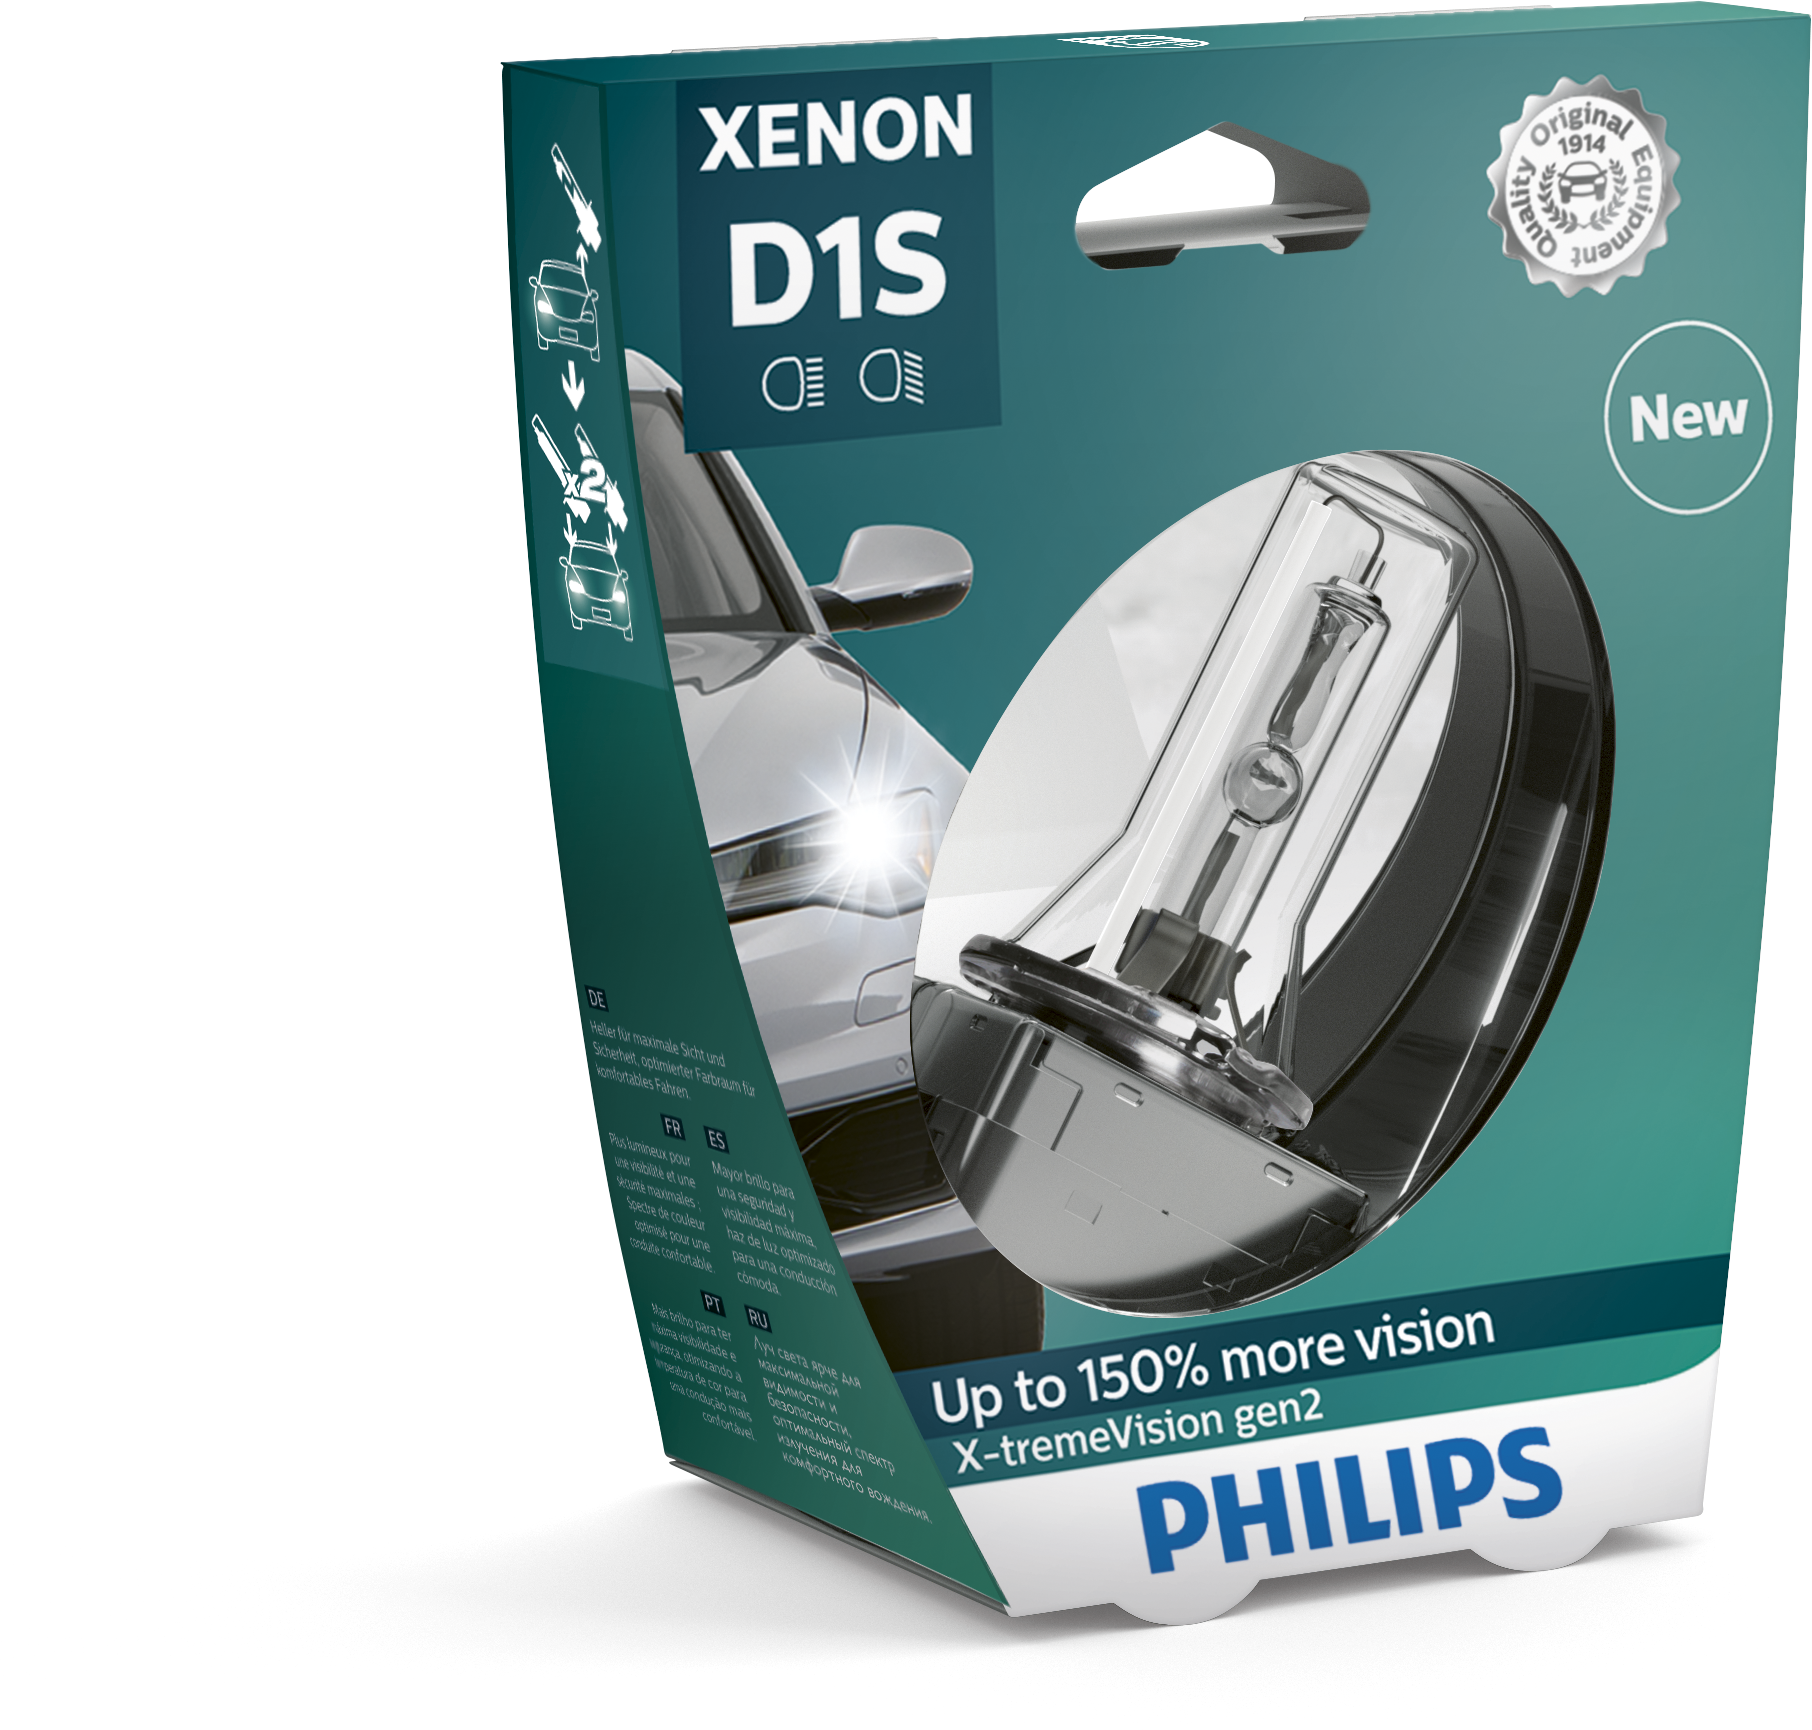 1x Philips D1S X-tremeVision gen2 85415XV2S1